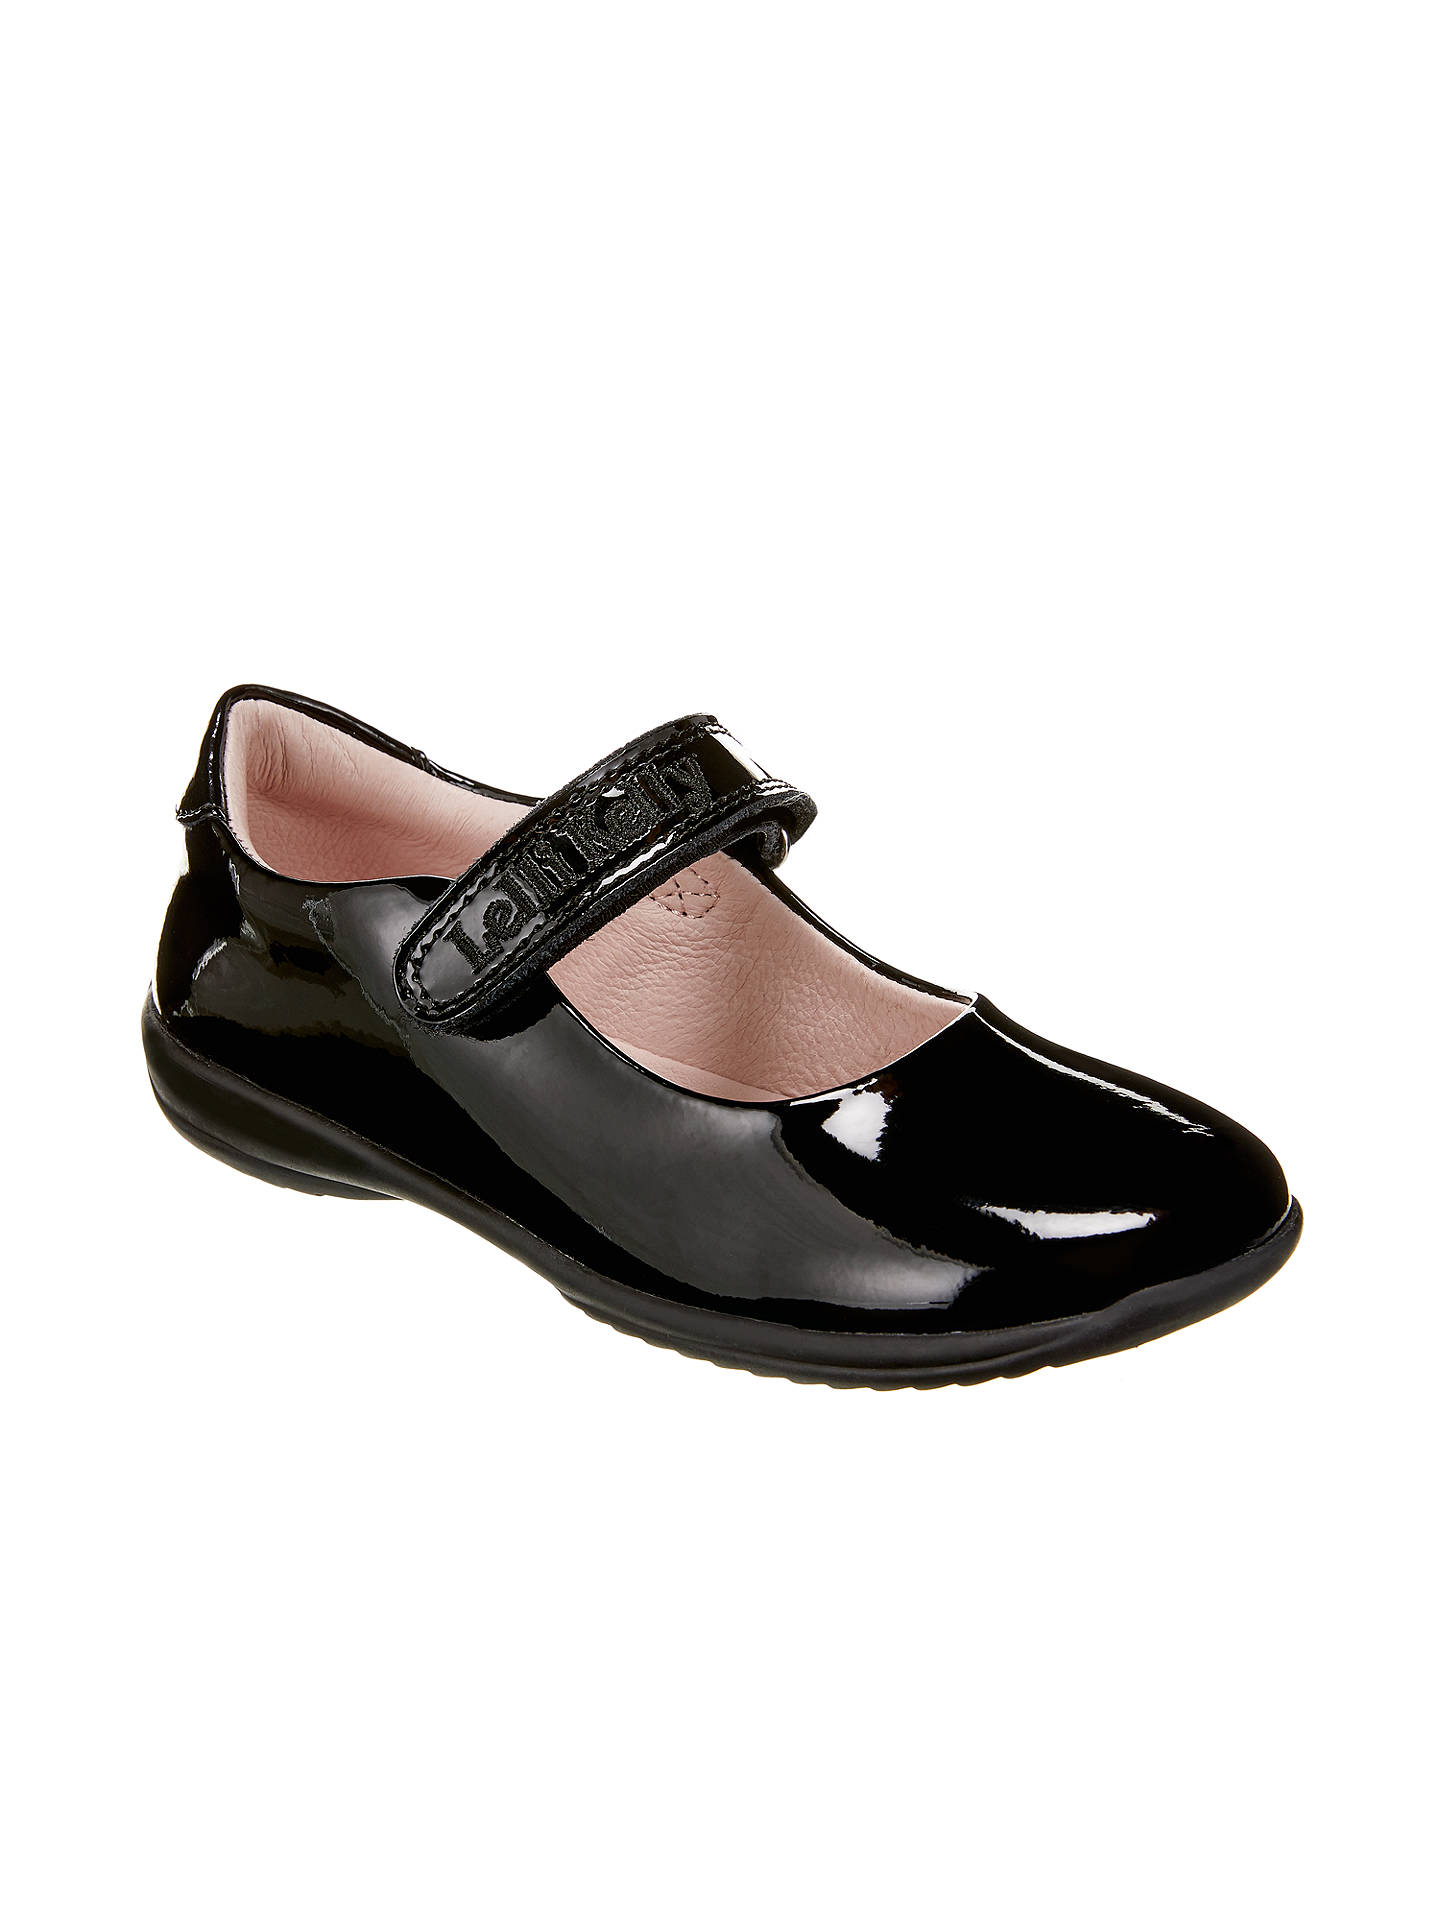 Lelli Kelly Children's Classic Mary Jane Riptape School Shoes, Black ...